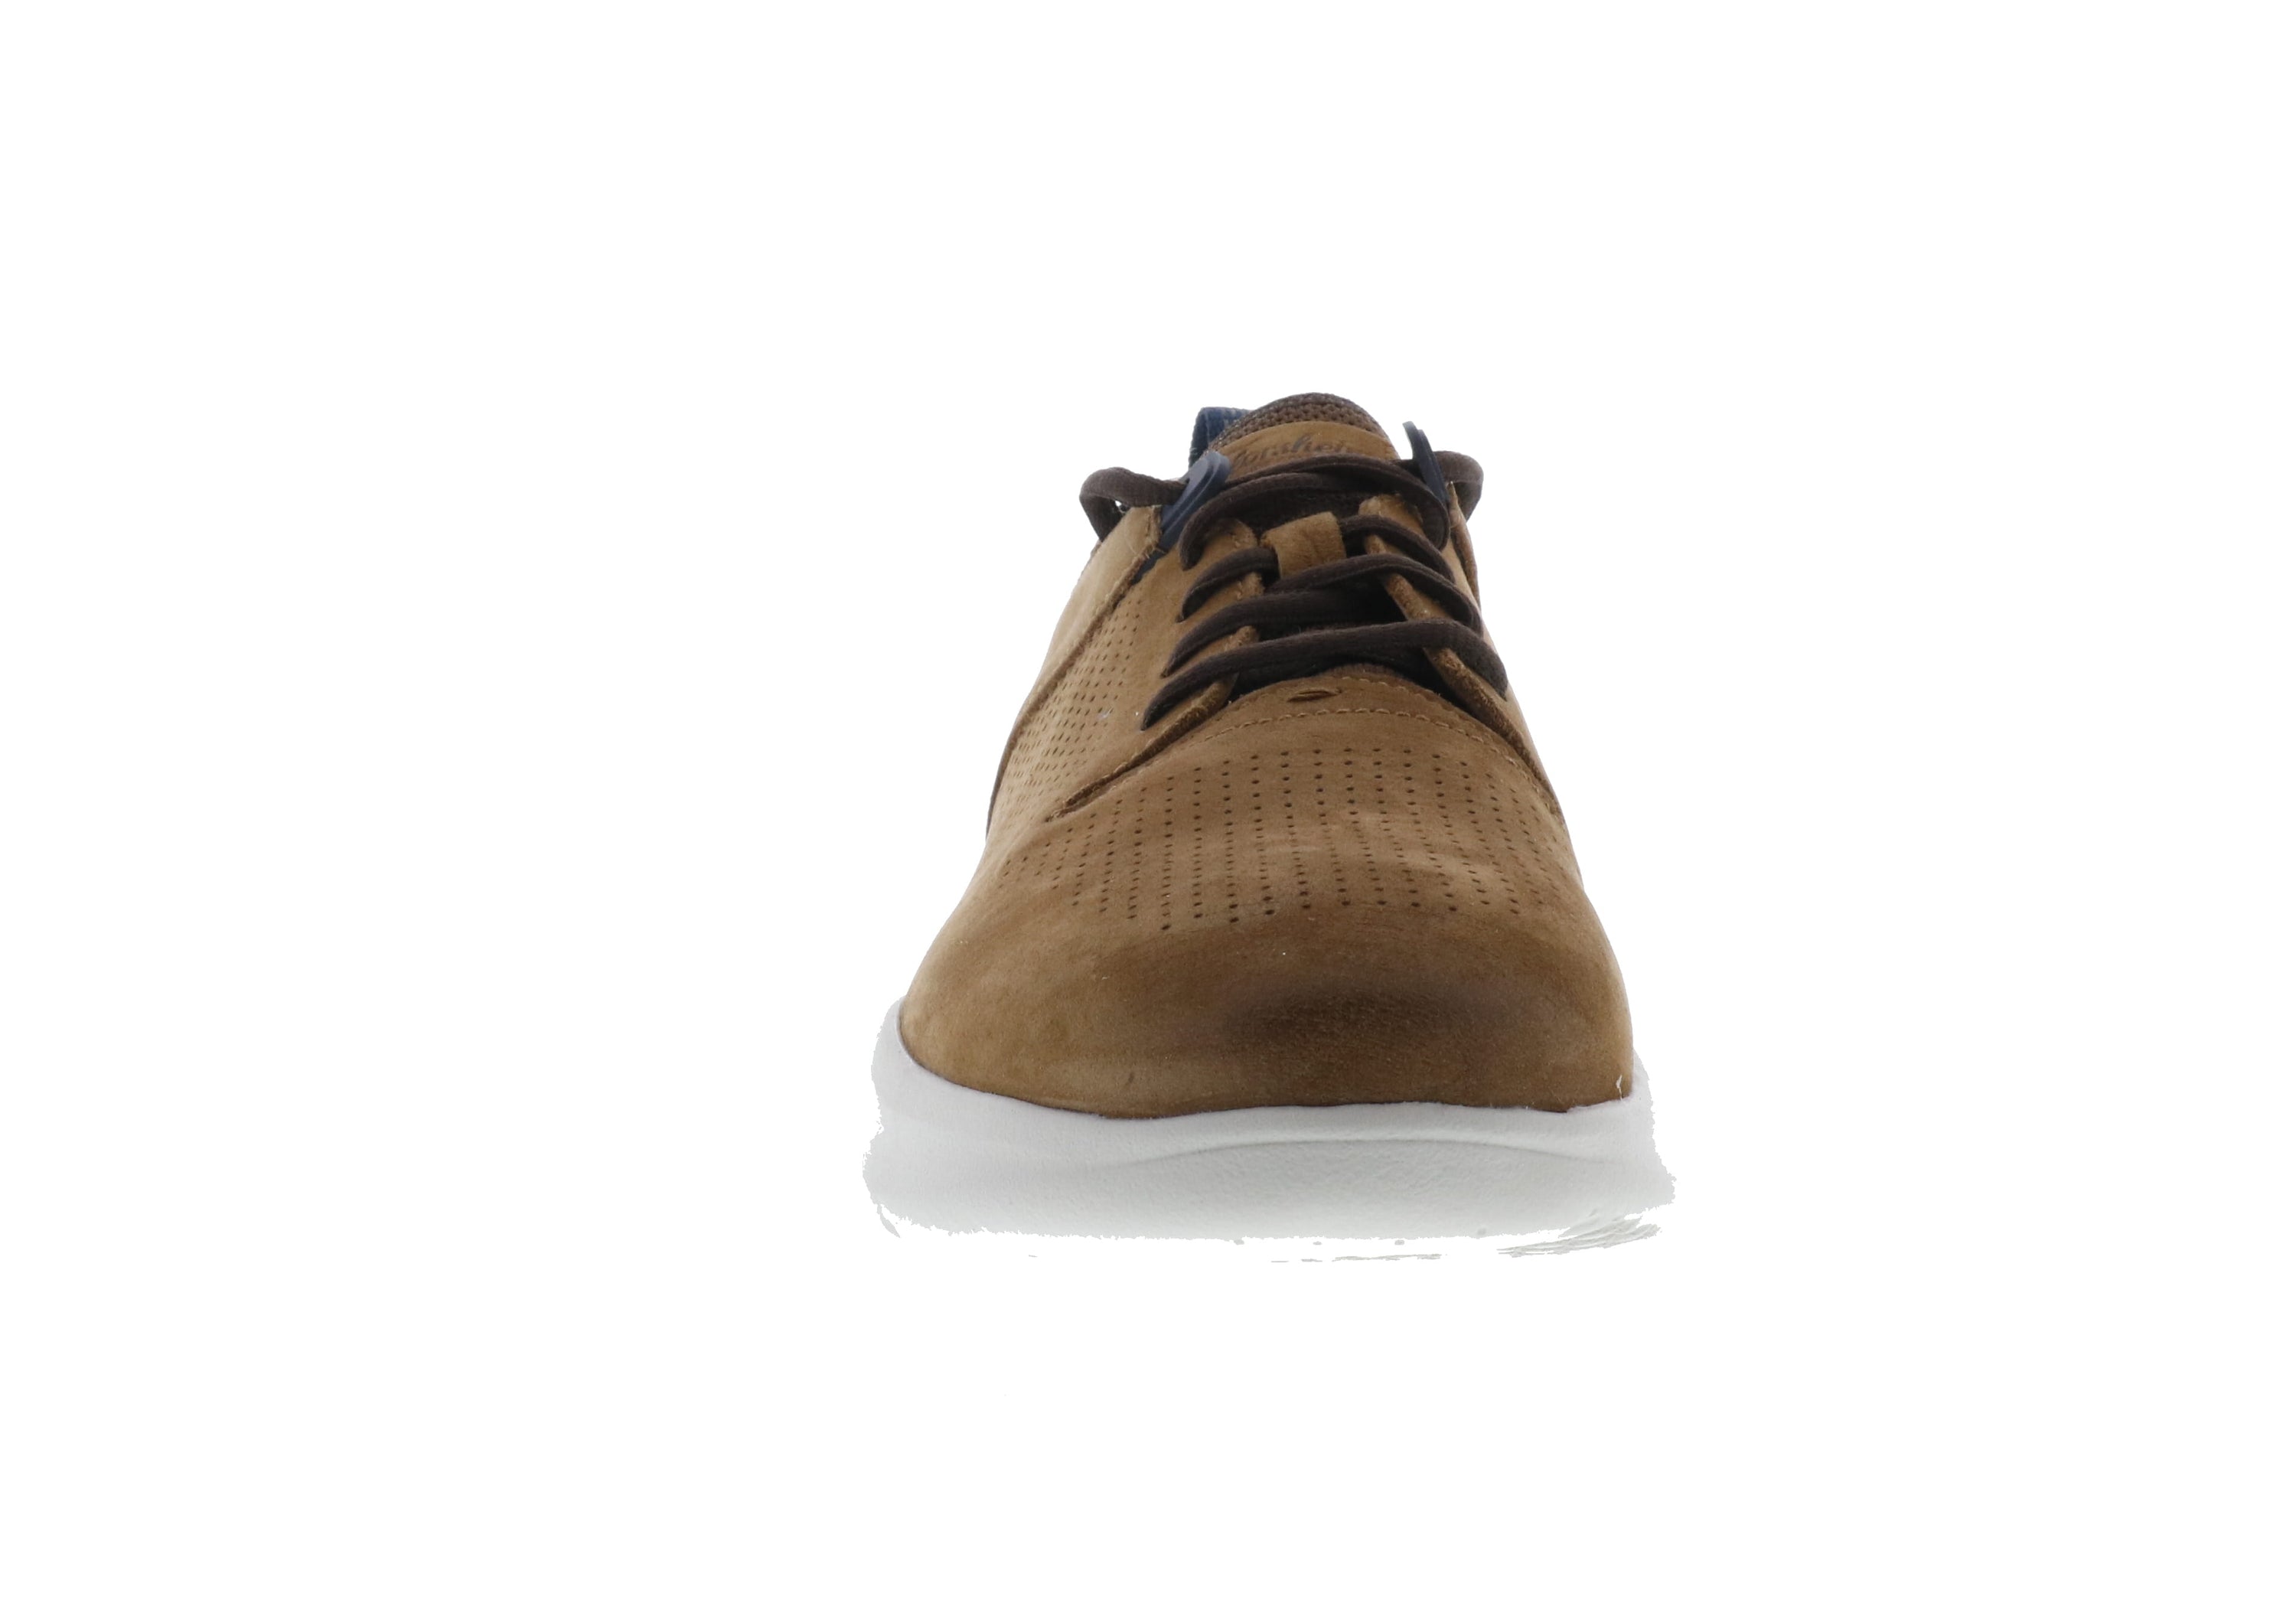 Florsheim Studio Perf Toe Lace Up Sneaker (Men's) - Tan Nubuck